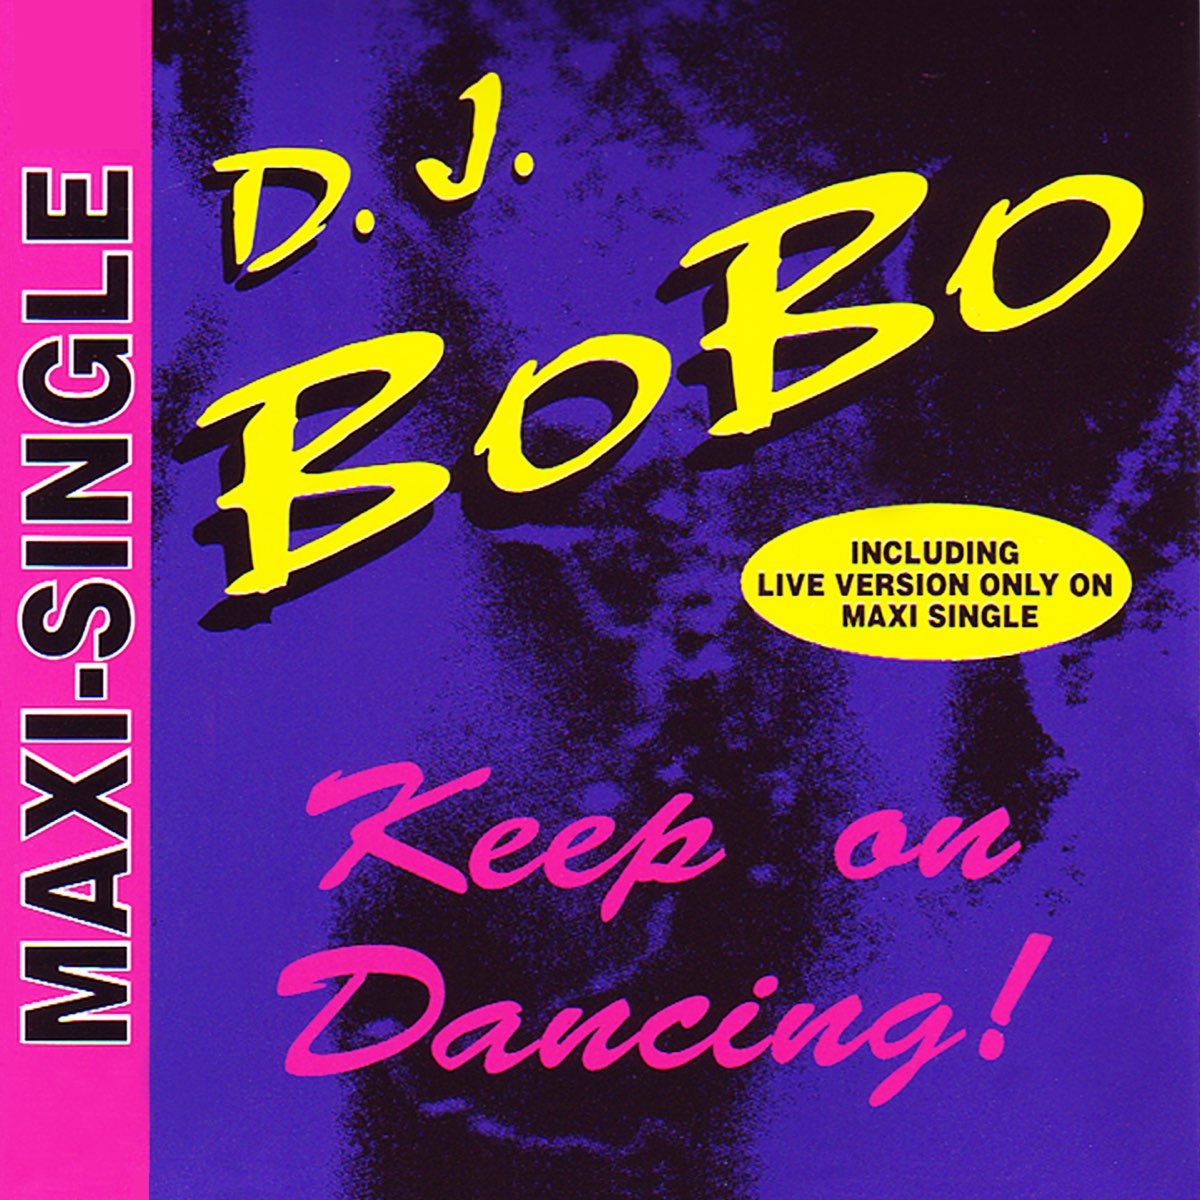 Dance dj bobo. DJ Bobo. Keep on Dancing. DJ Bobo Dance with me 1993. DJ Bobo keep on Dancing Remix.